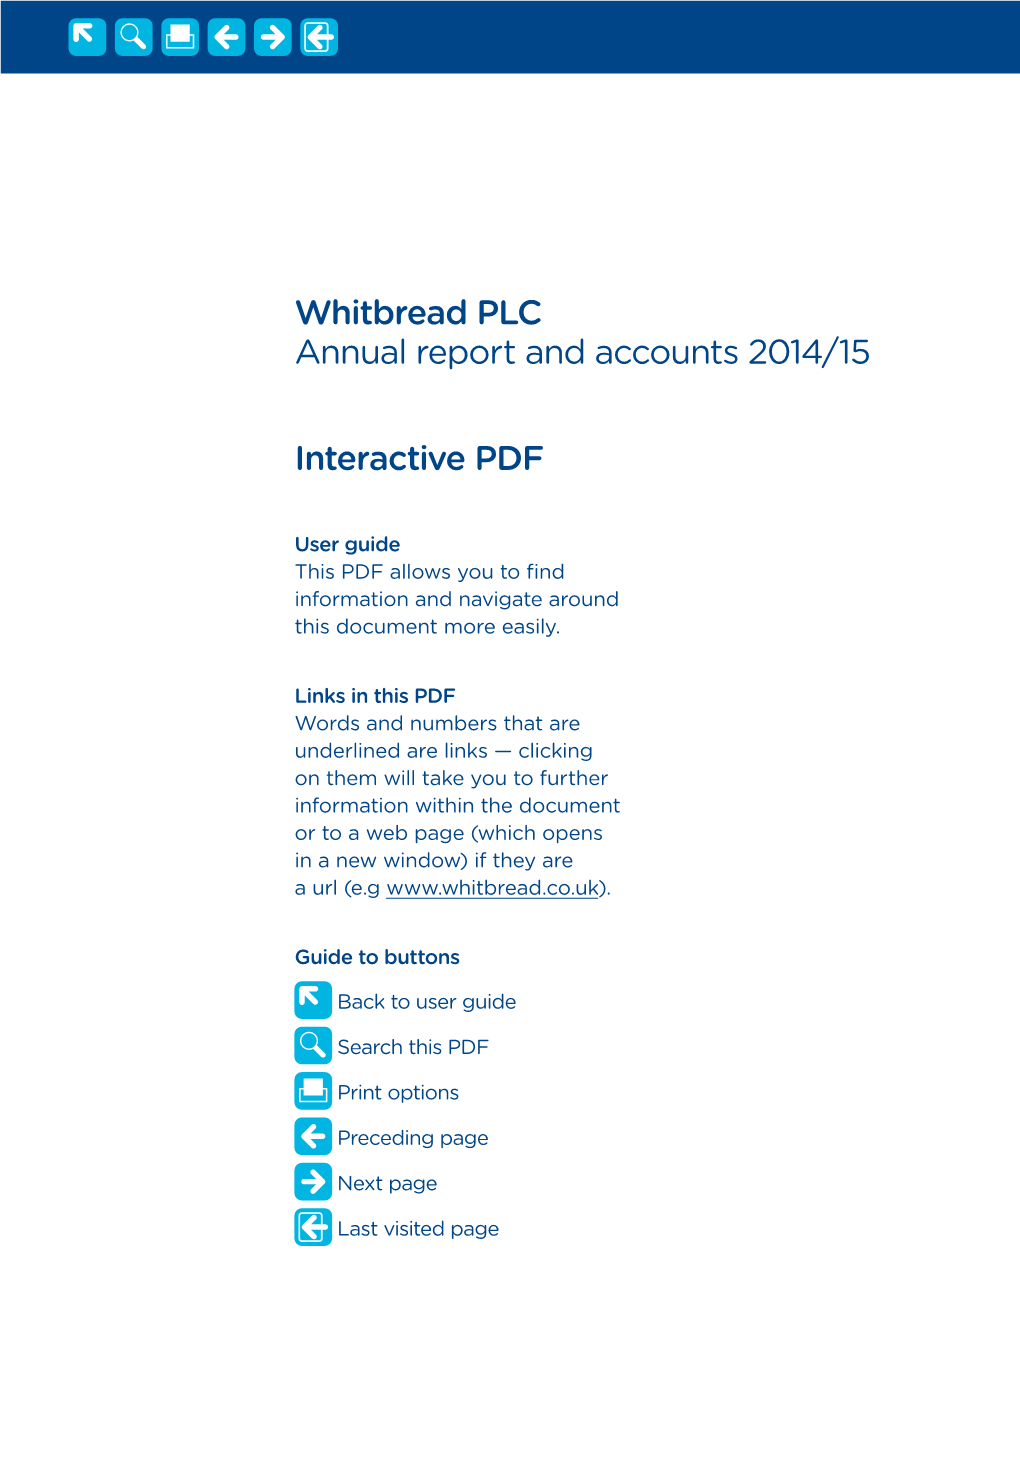 Interactive PDF Whitbread PLC Annual Report and Accounts 2014/15